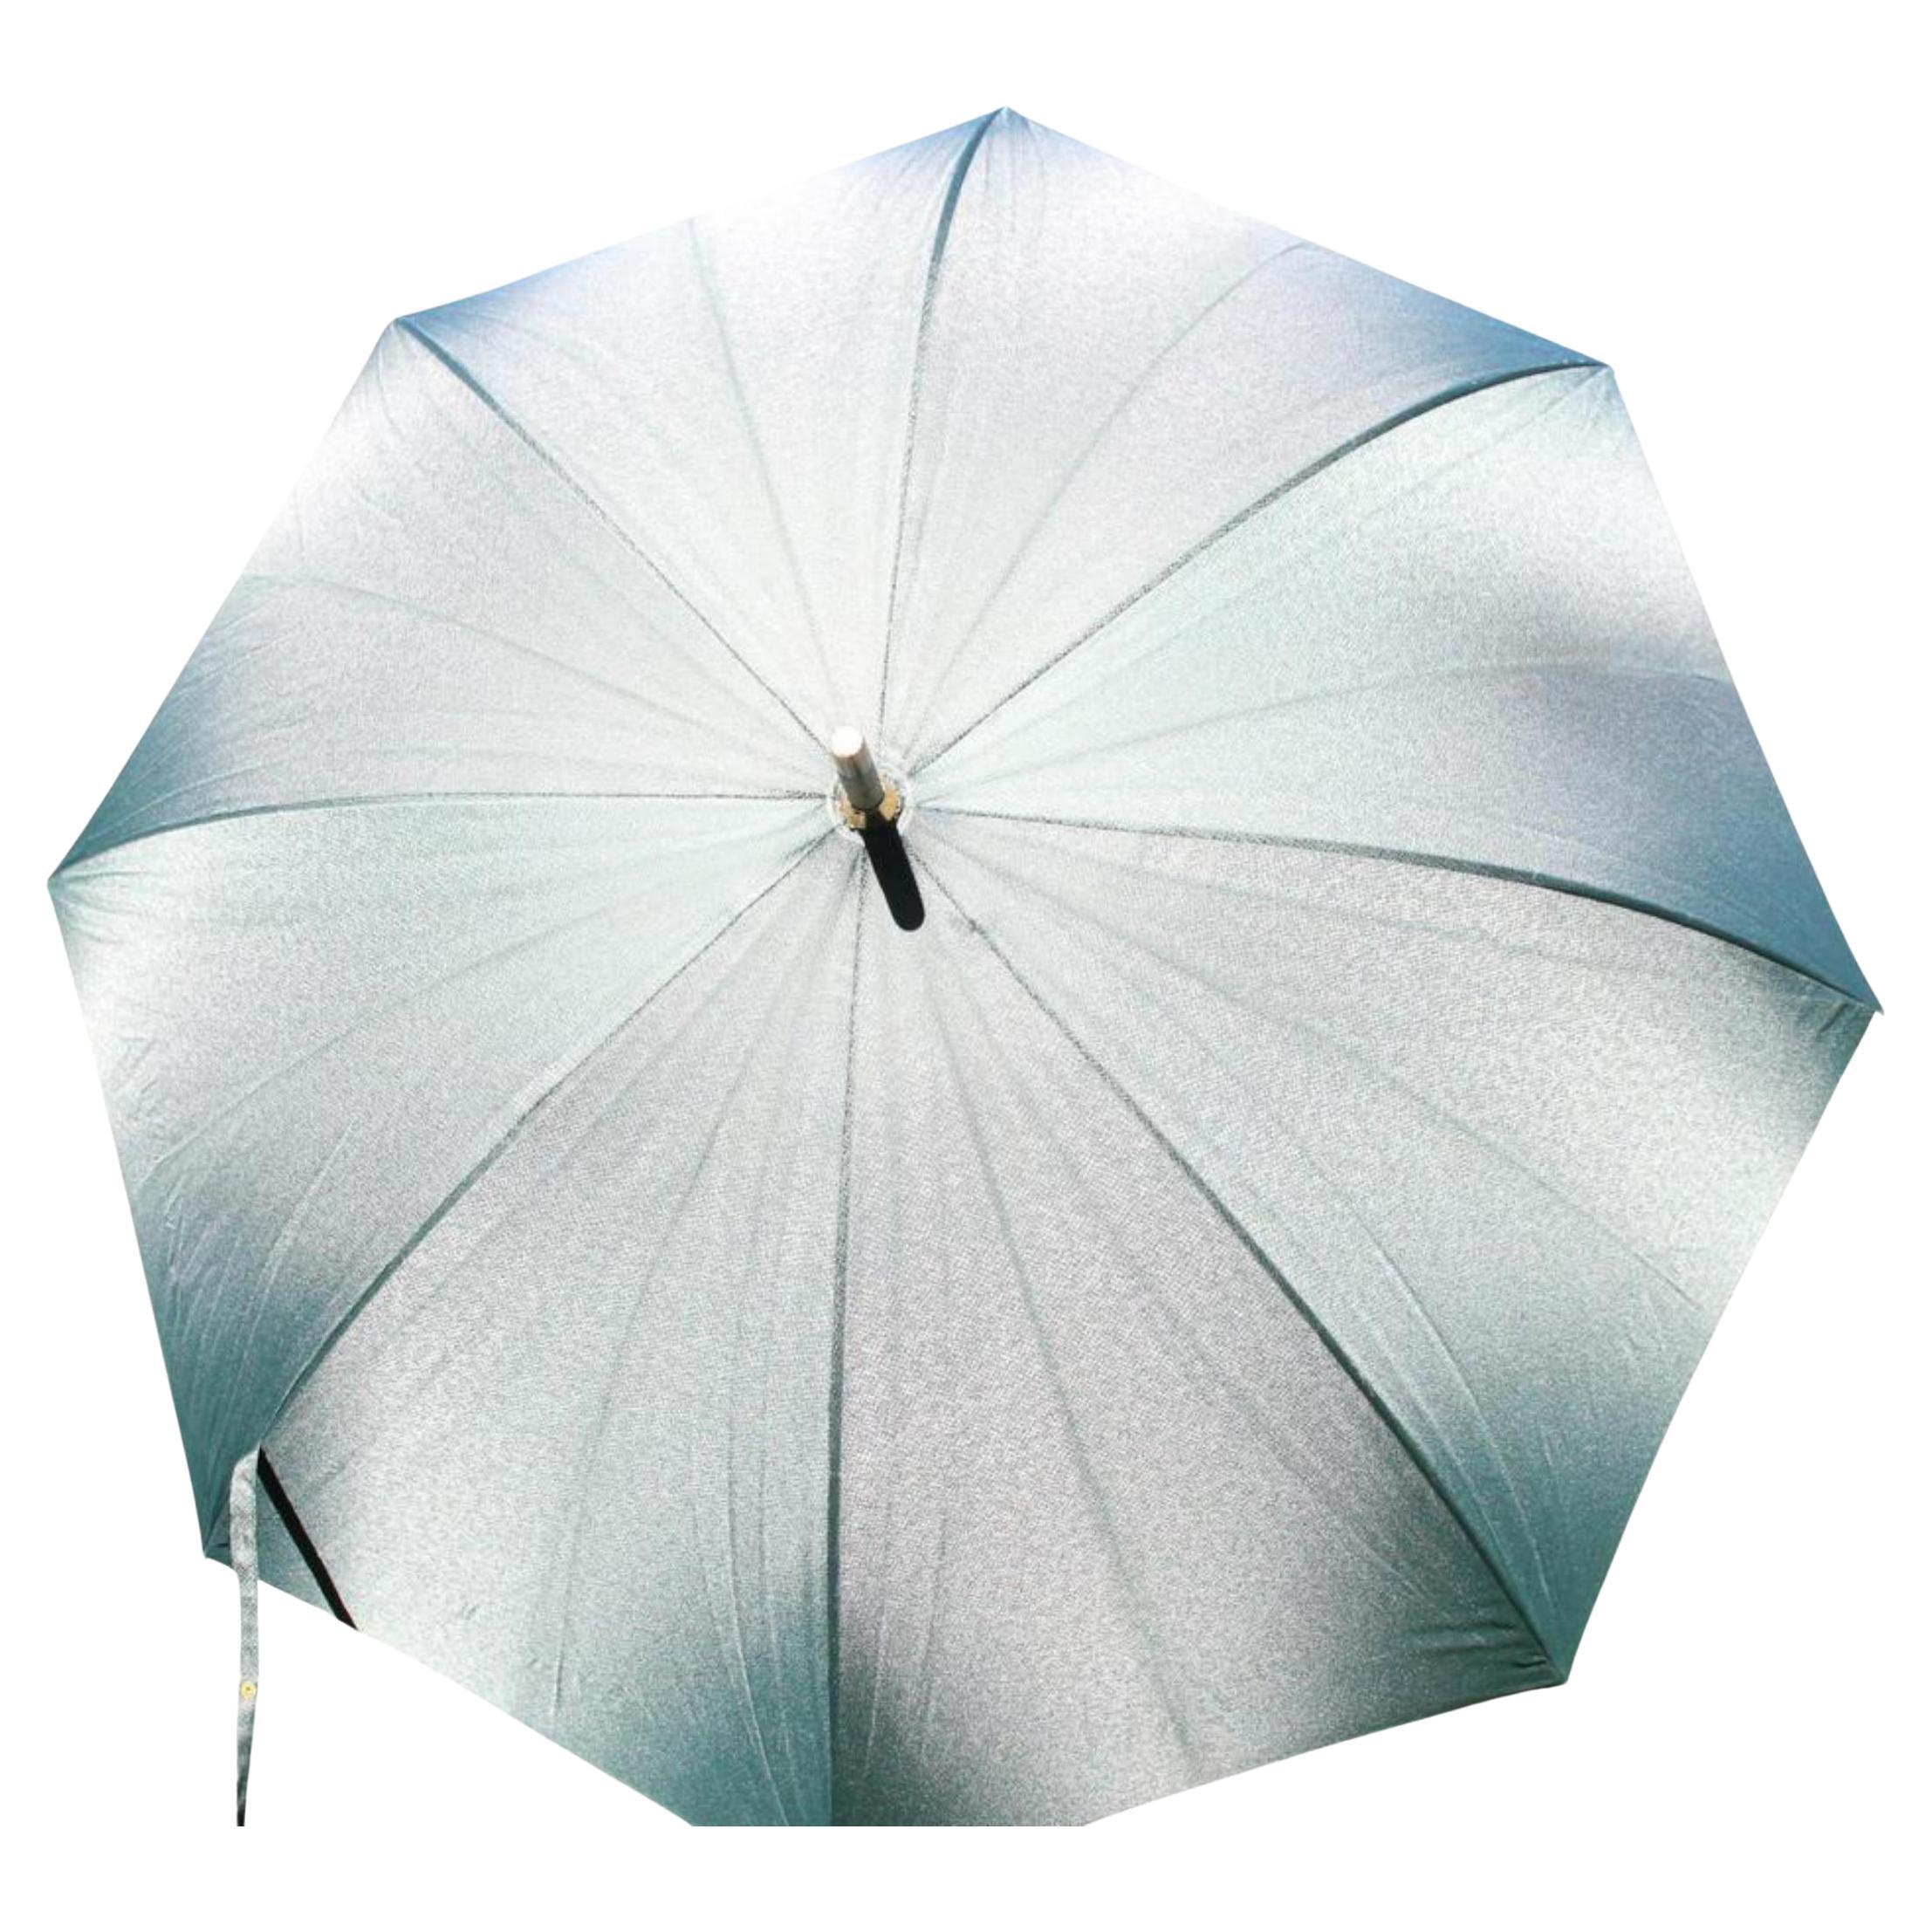 Louis Vuitton Umbrella - 5 For Sale on 1stDibs